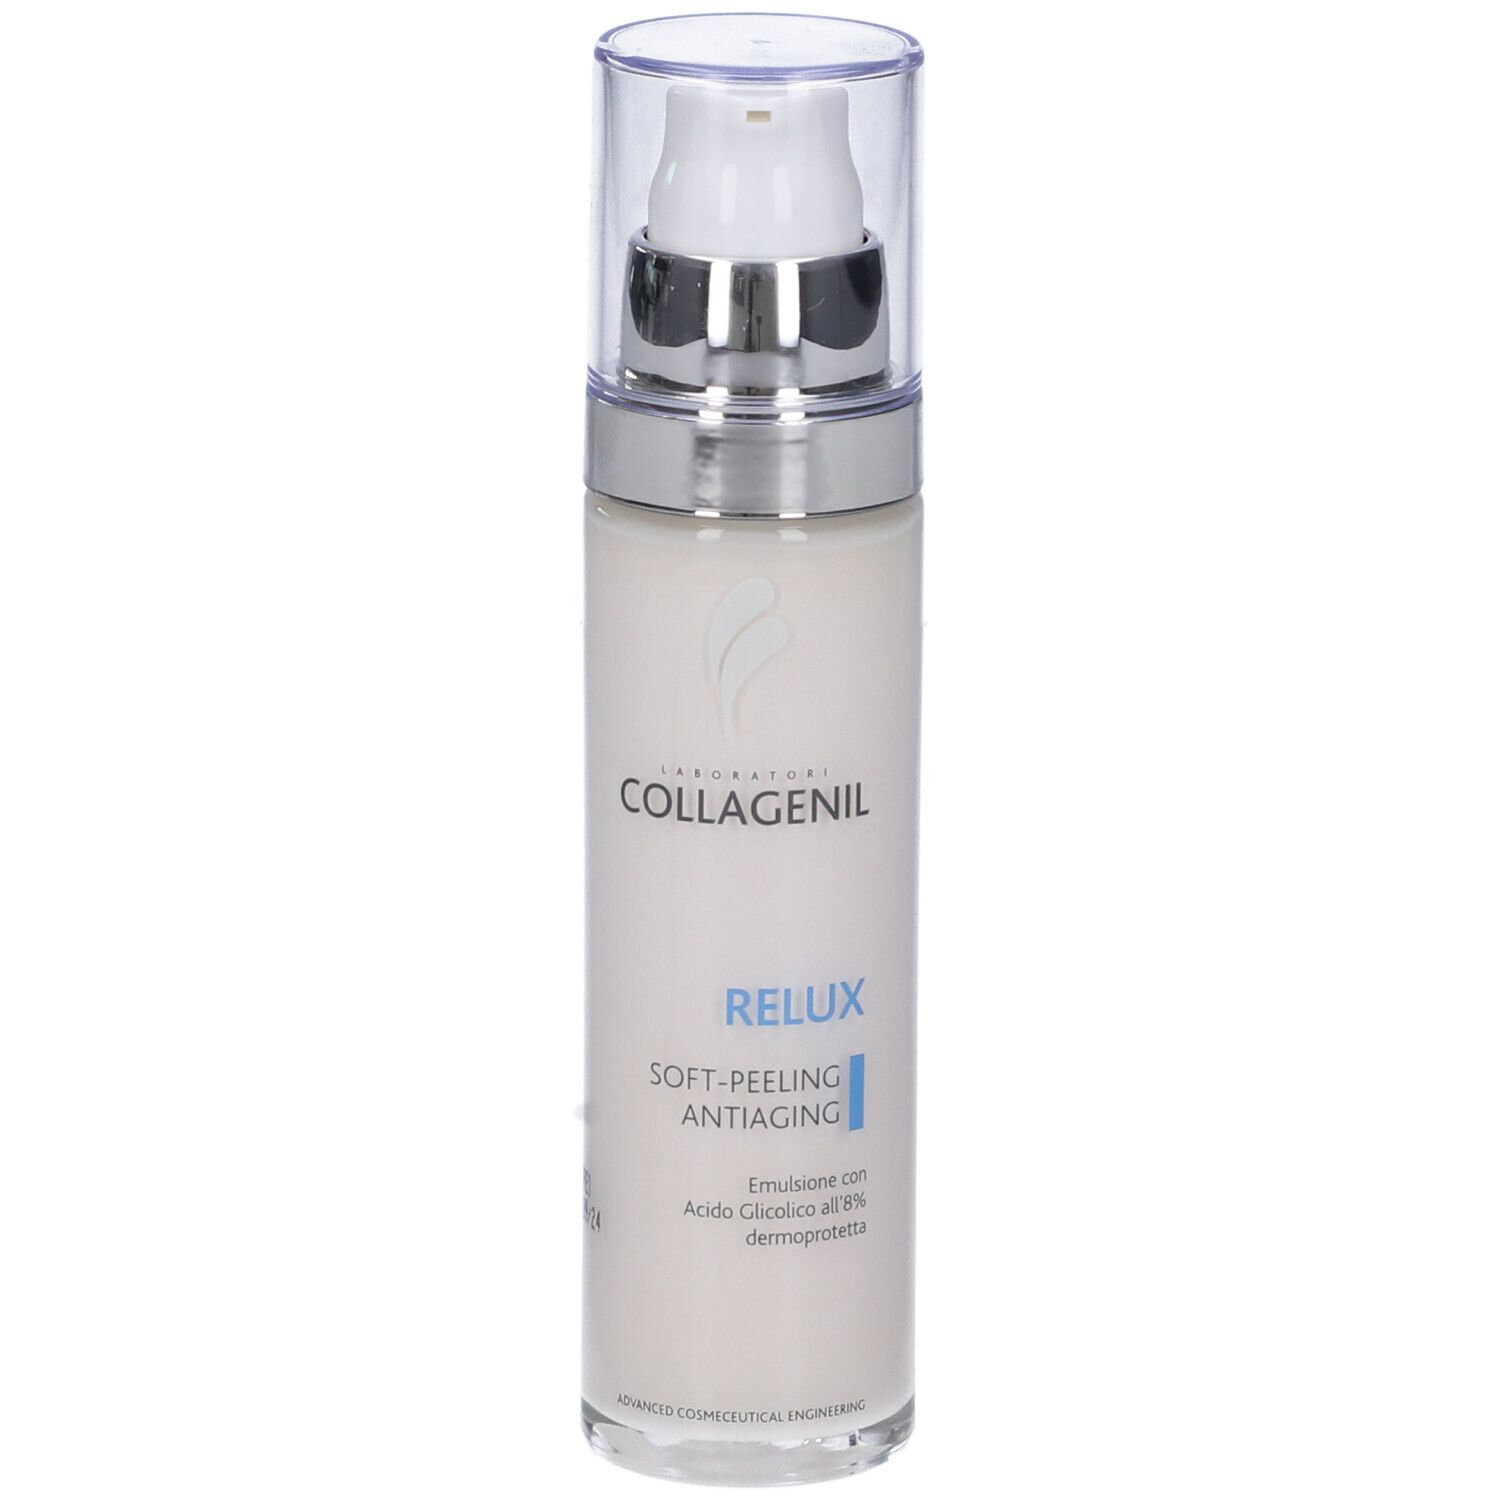 Collagenil Relux Soft Peeling